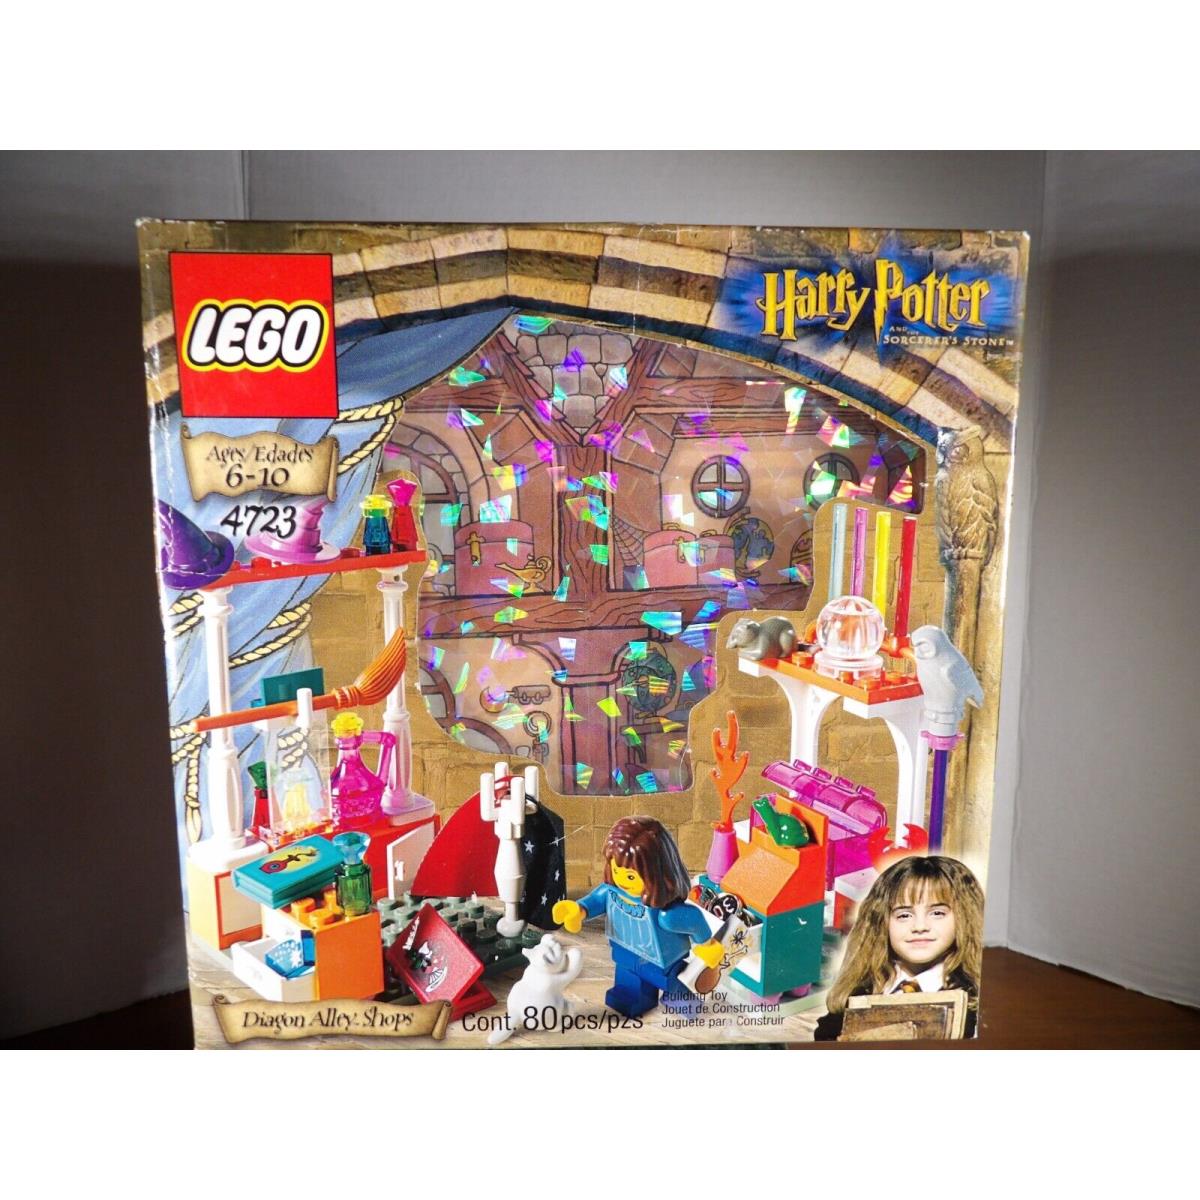 Lego Harry Potter Diagon Alley Shops Set 4723